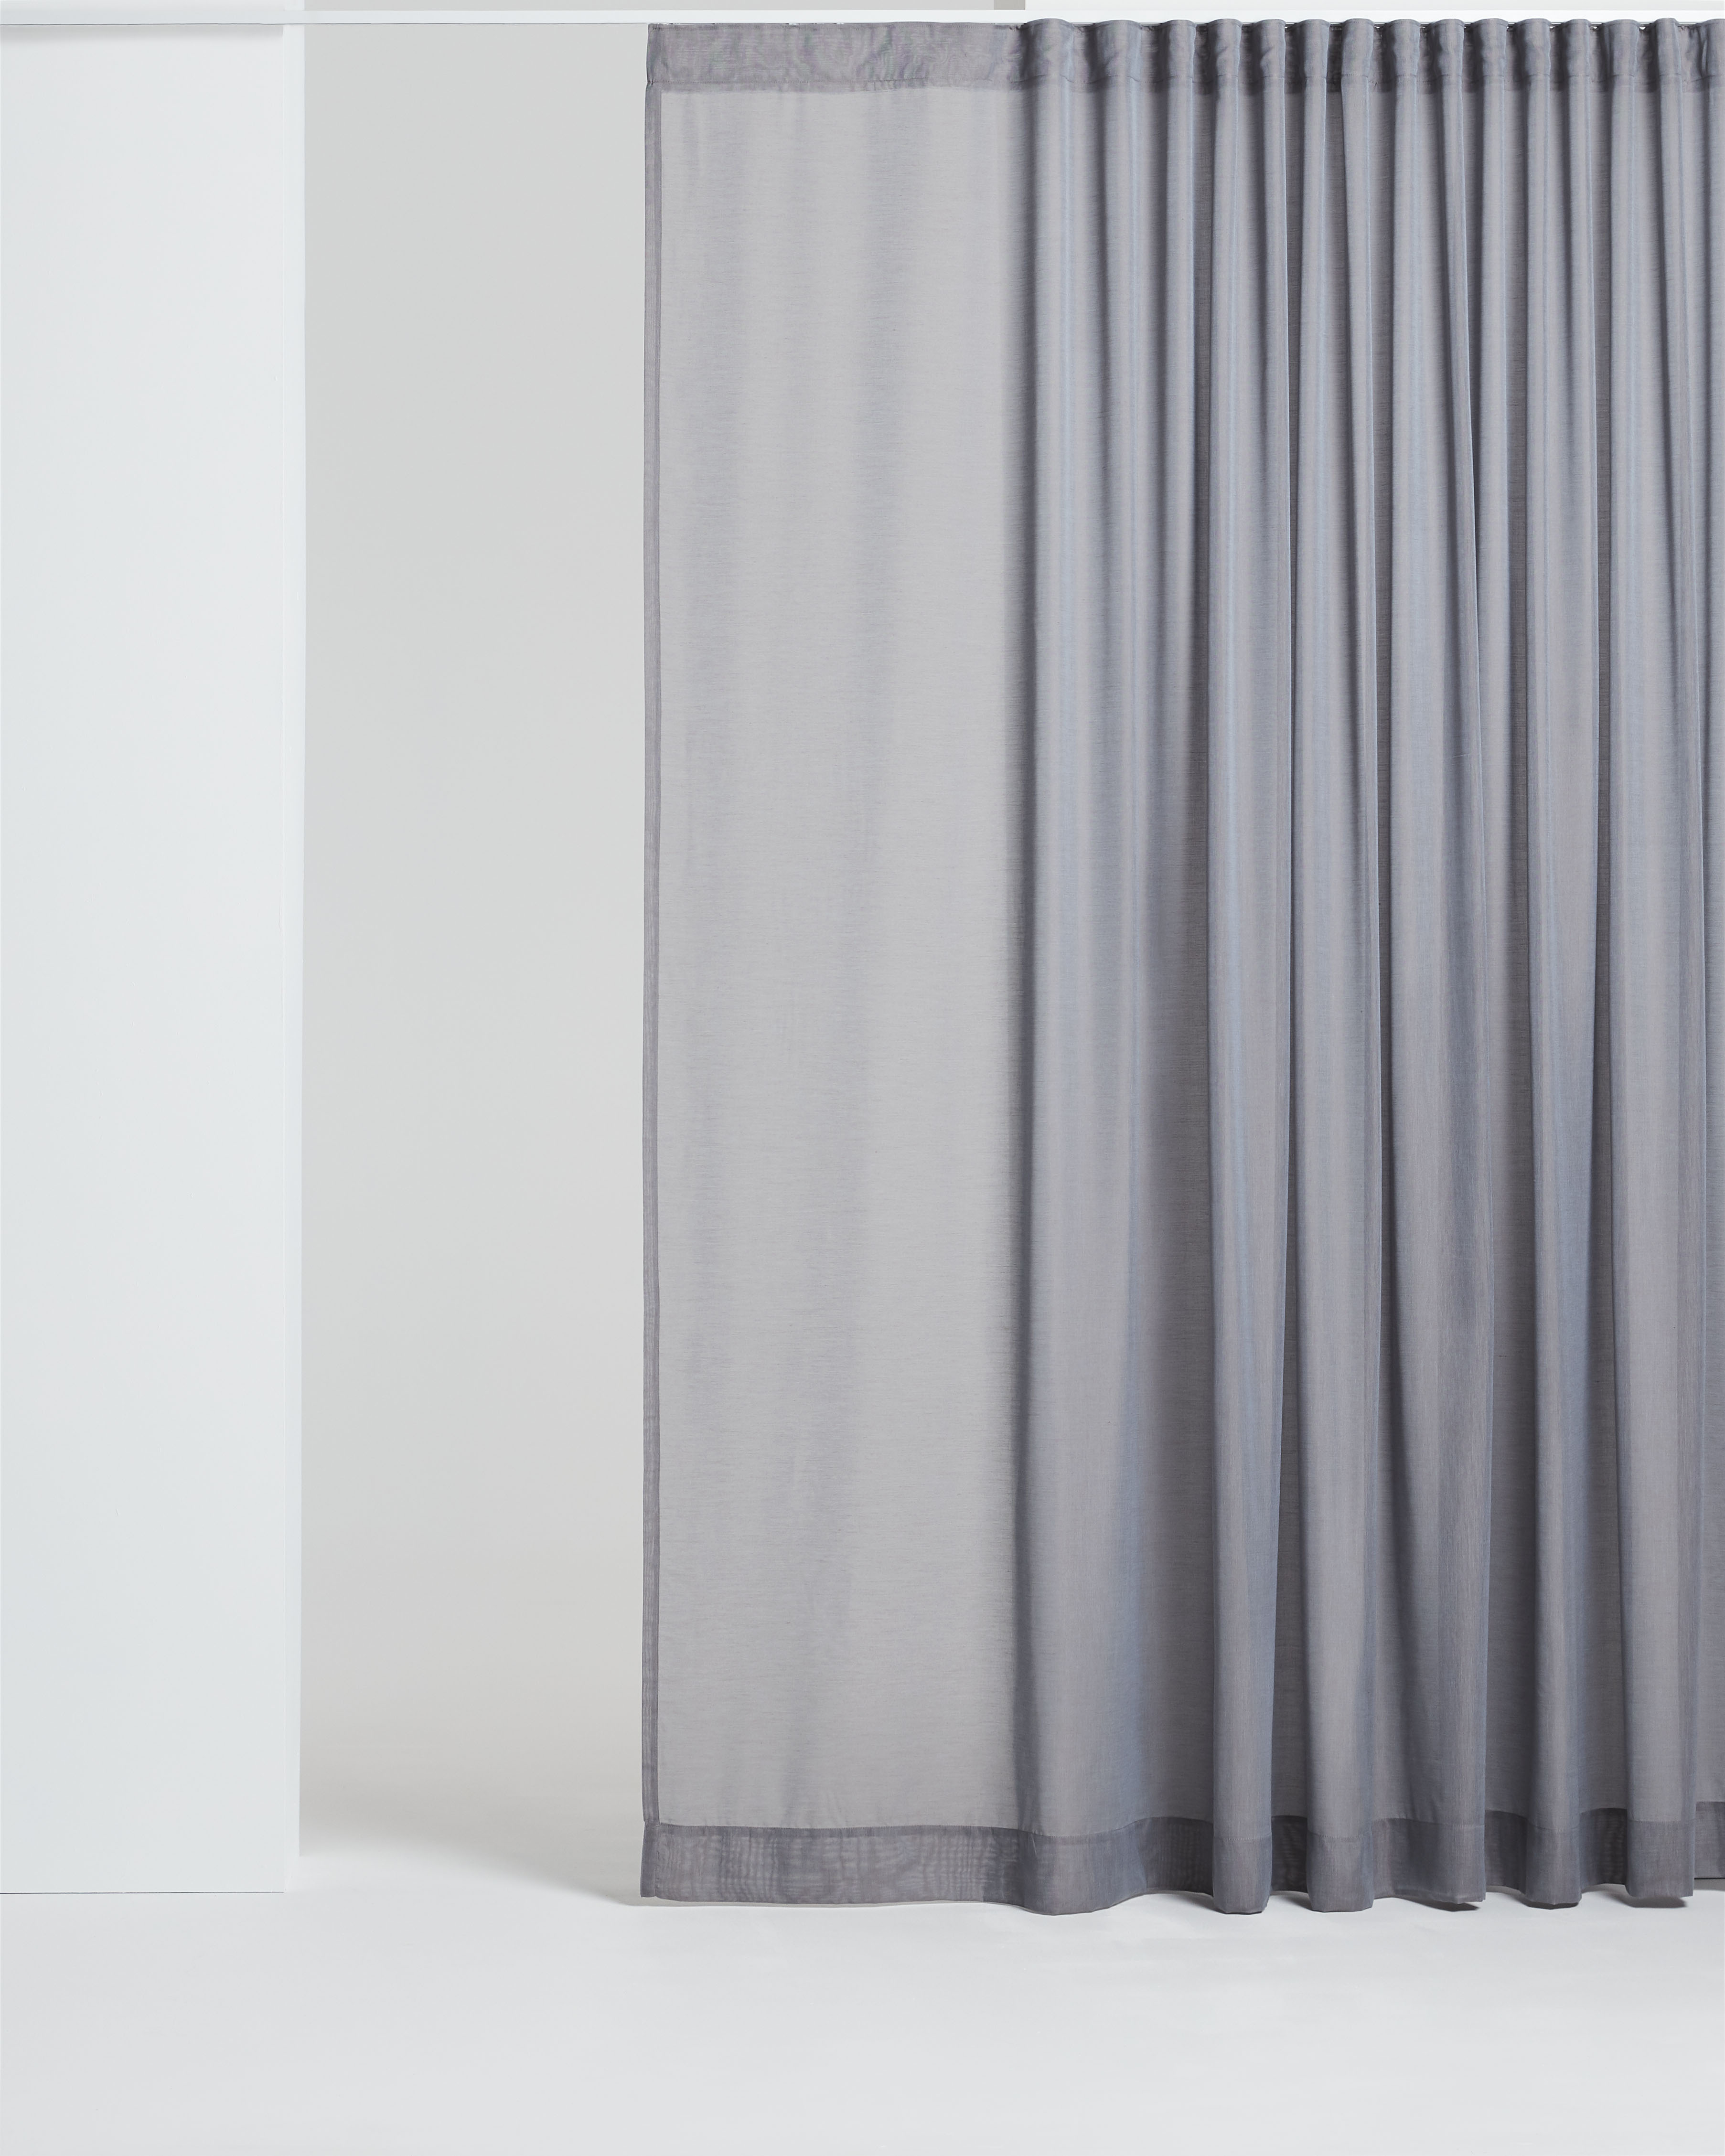 MINT | | Products Hanging Svensson | fabrics